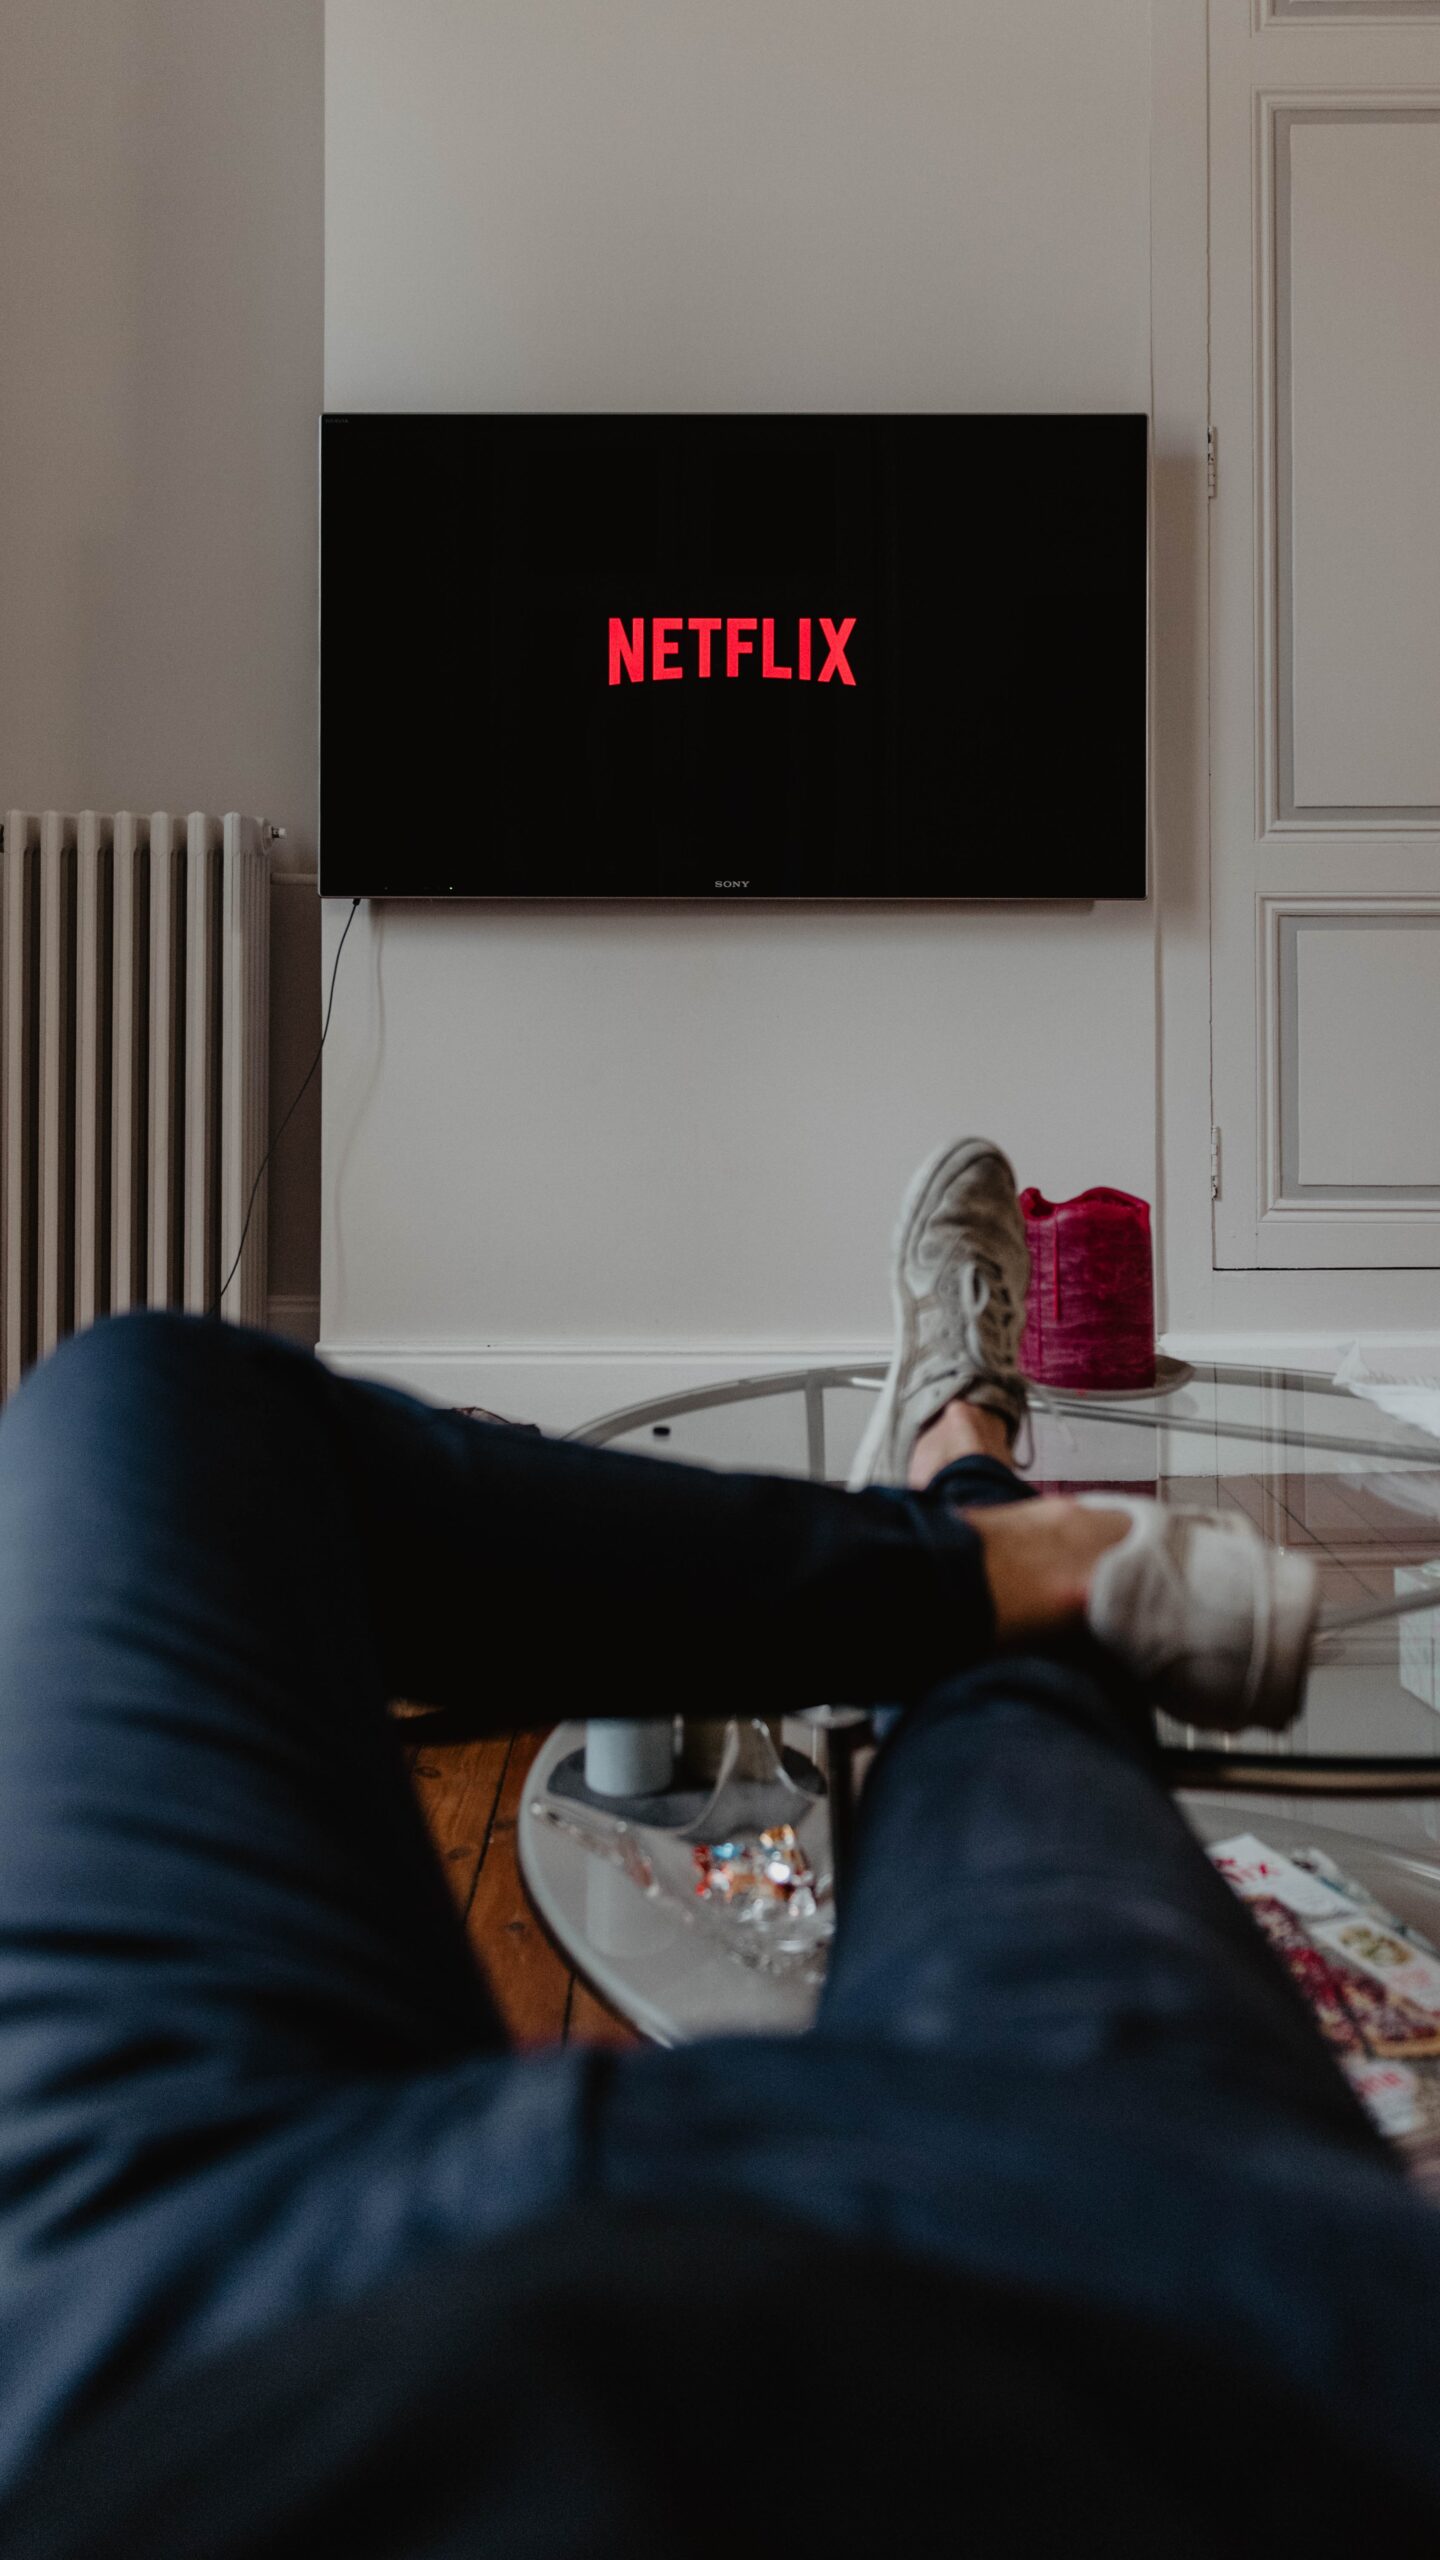 Netflix Nigeria